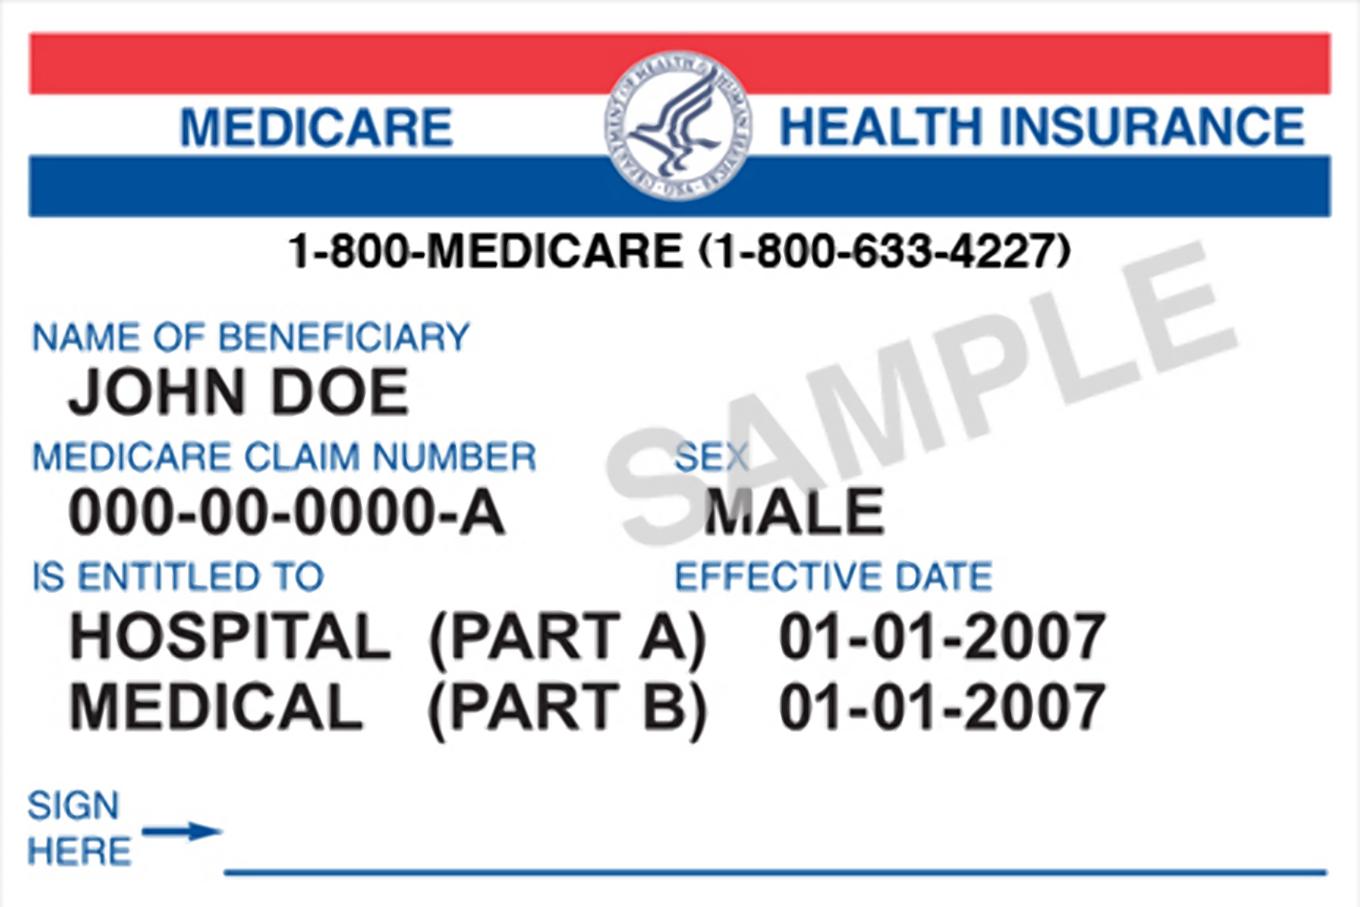 Sample of Medicare Health Insurance card